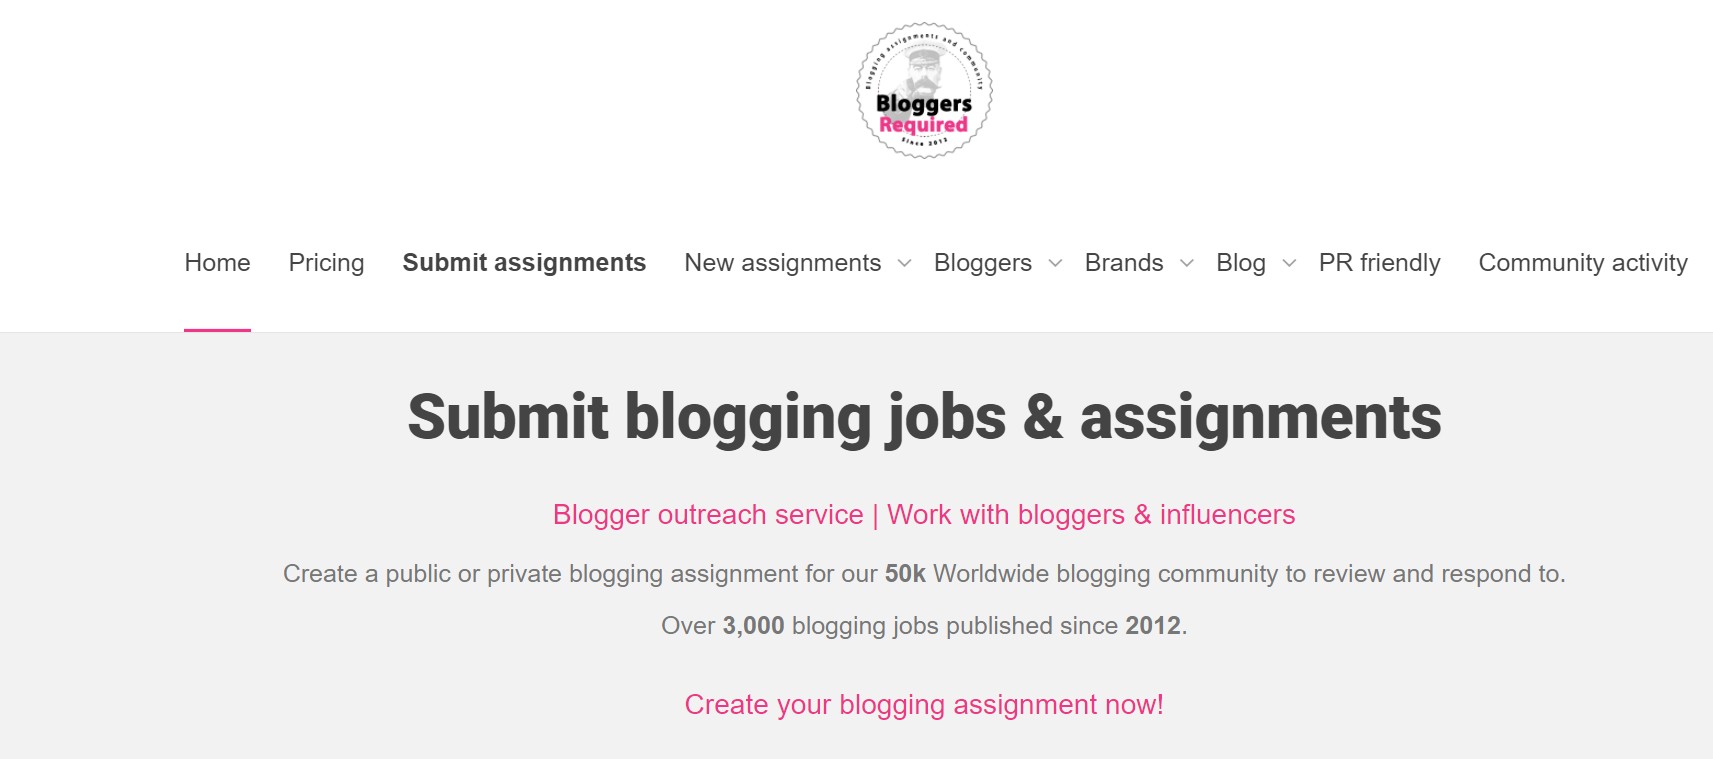 <img src="bloggers.jpg" alt="bloggers required make money freelancing online"/> 